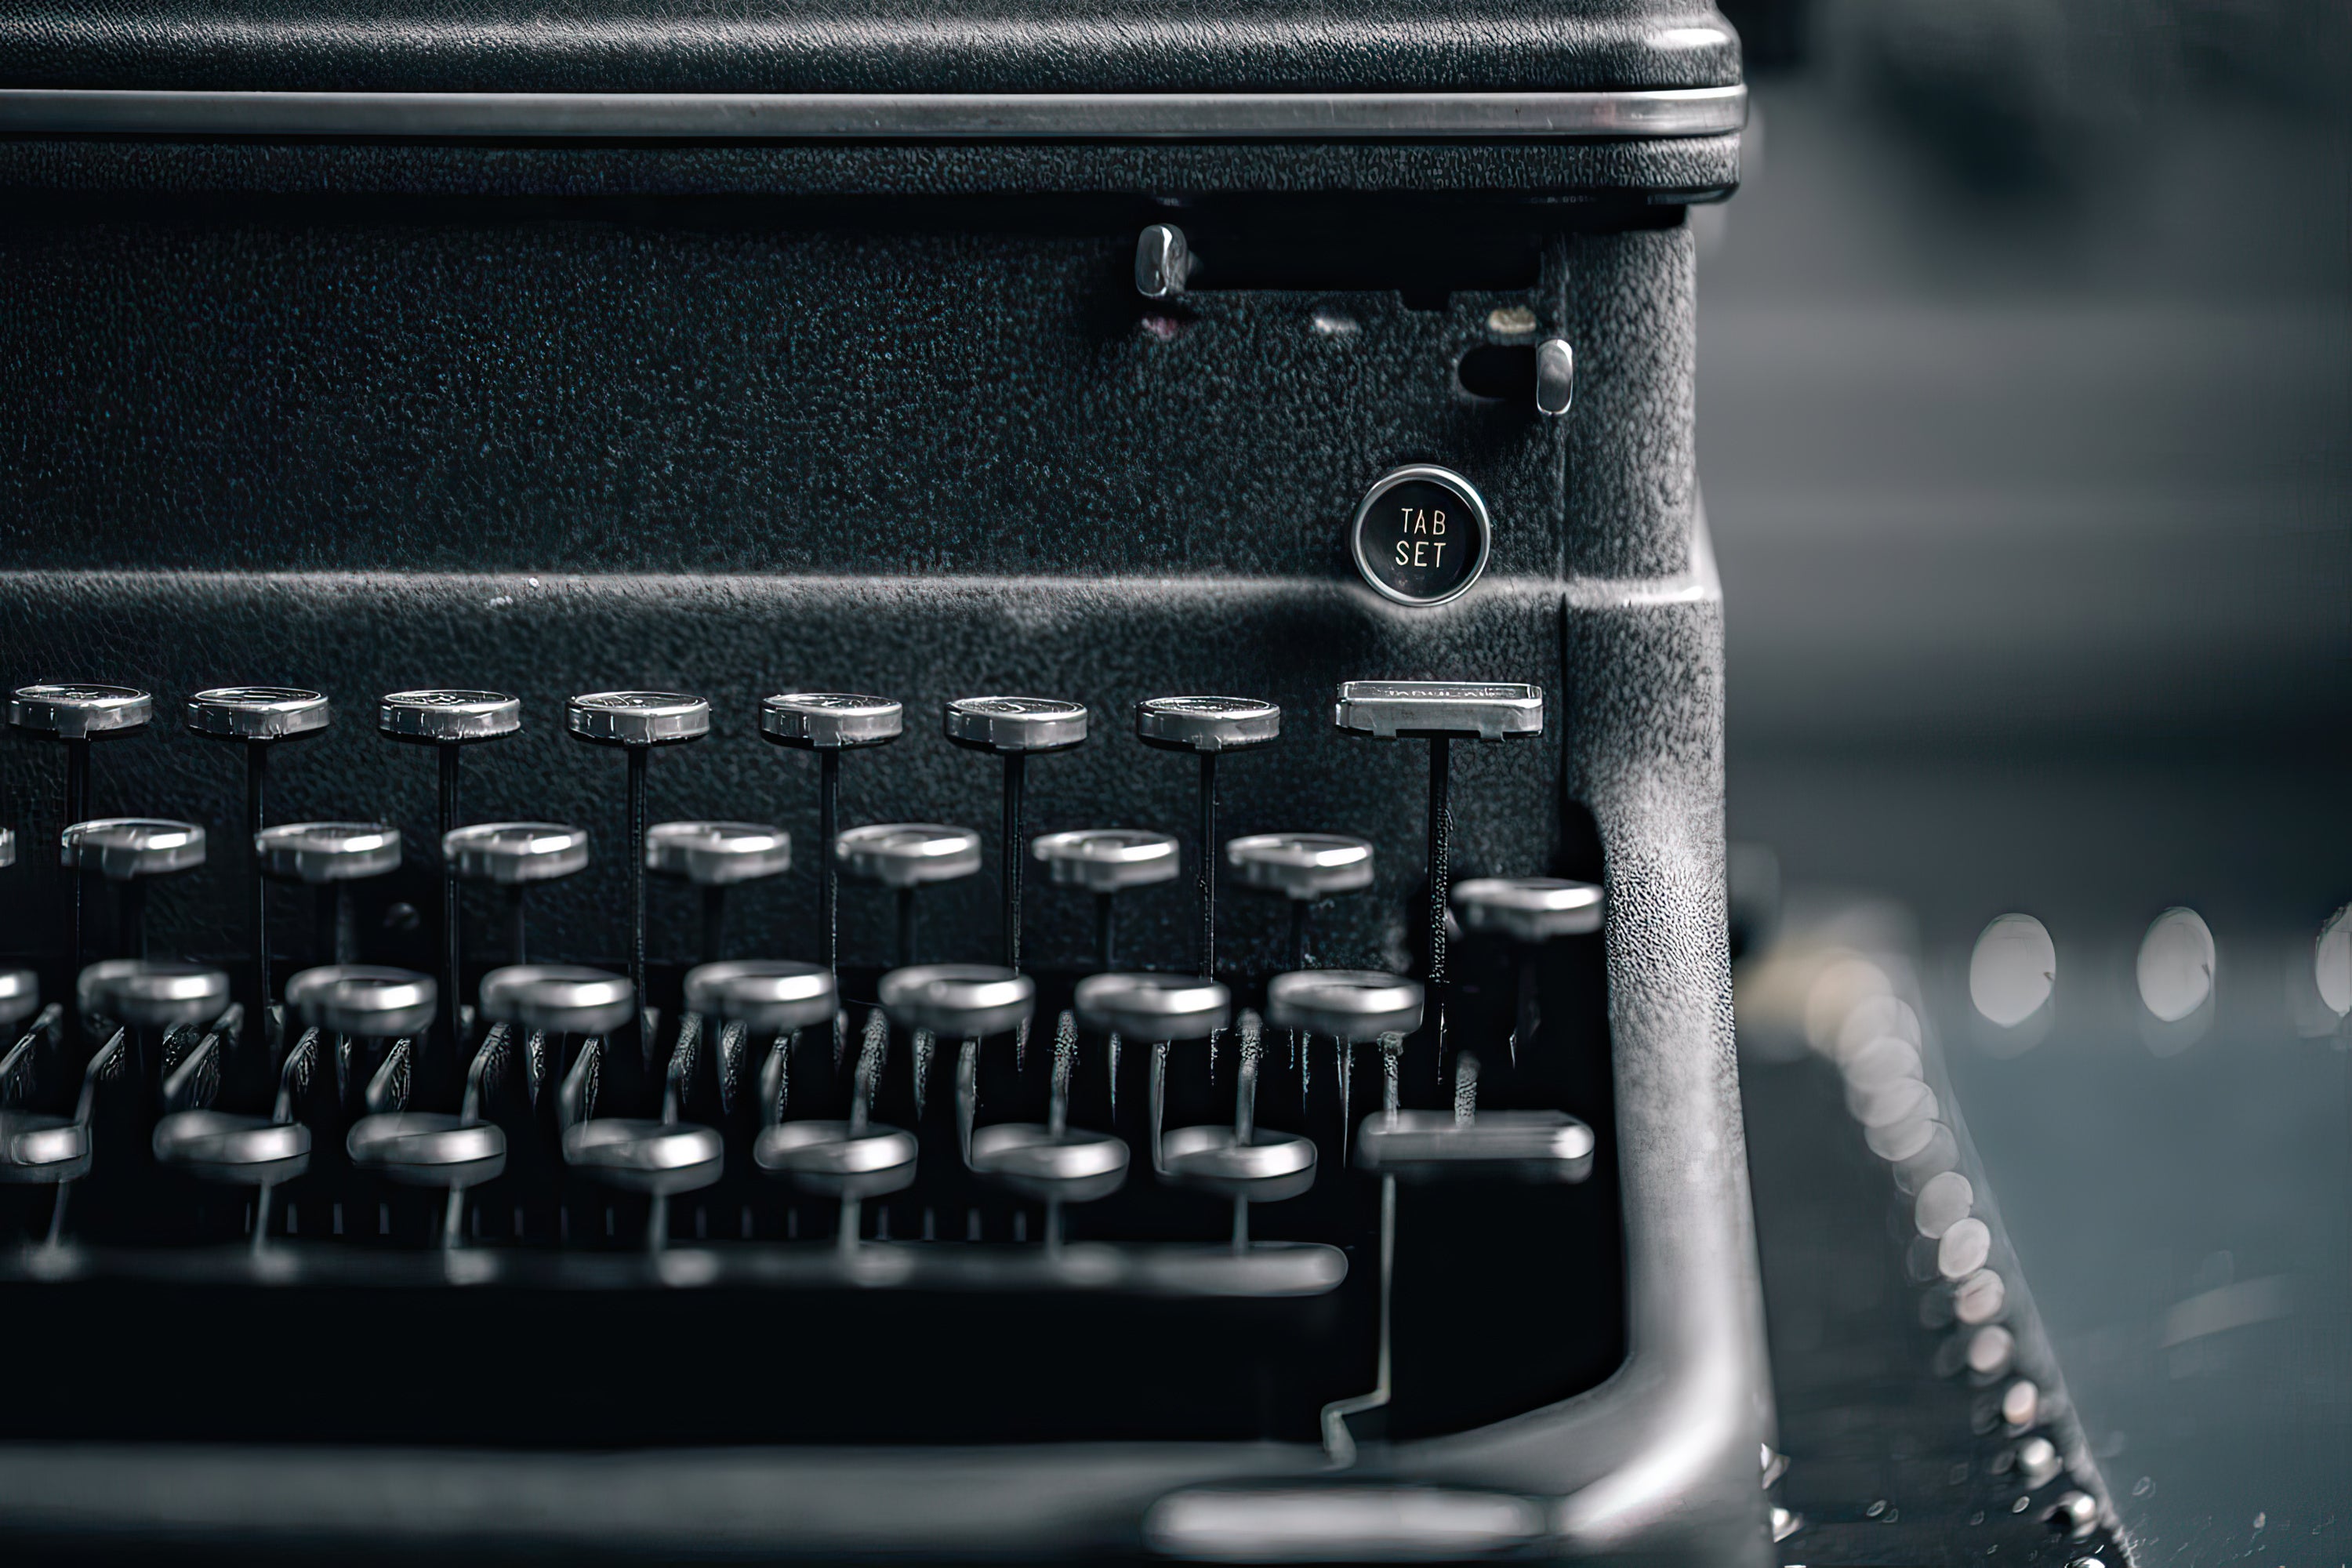 2021 True Story Showcase - Image of vintage typewriter